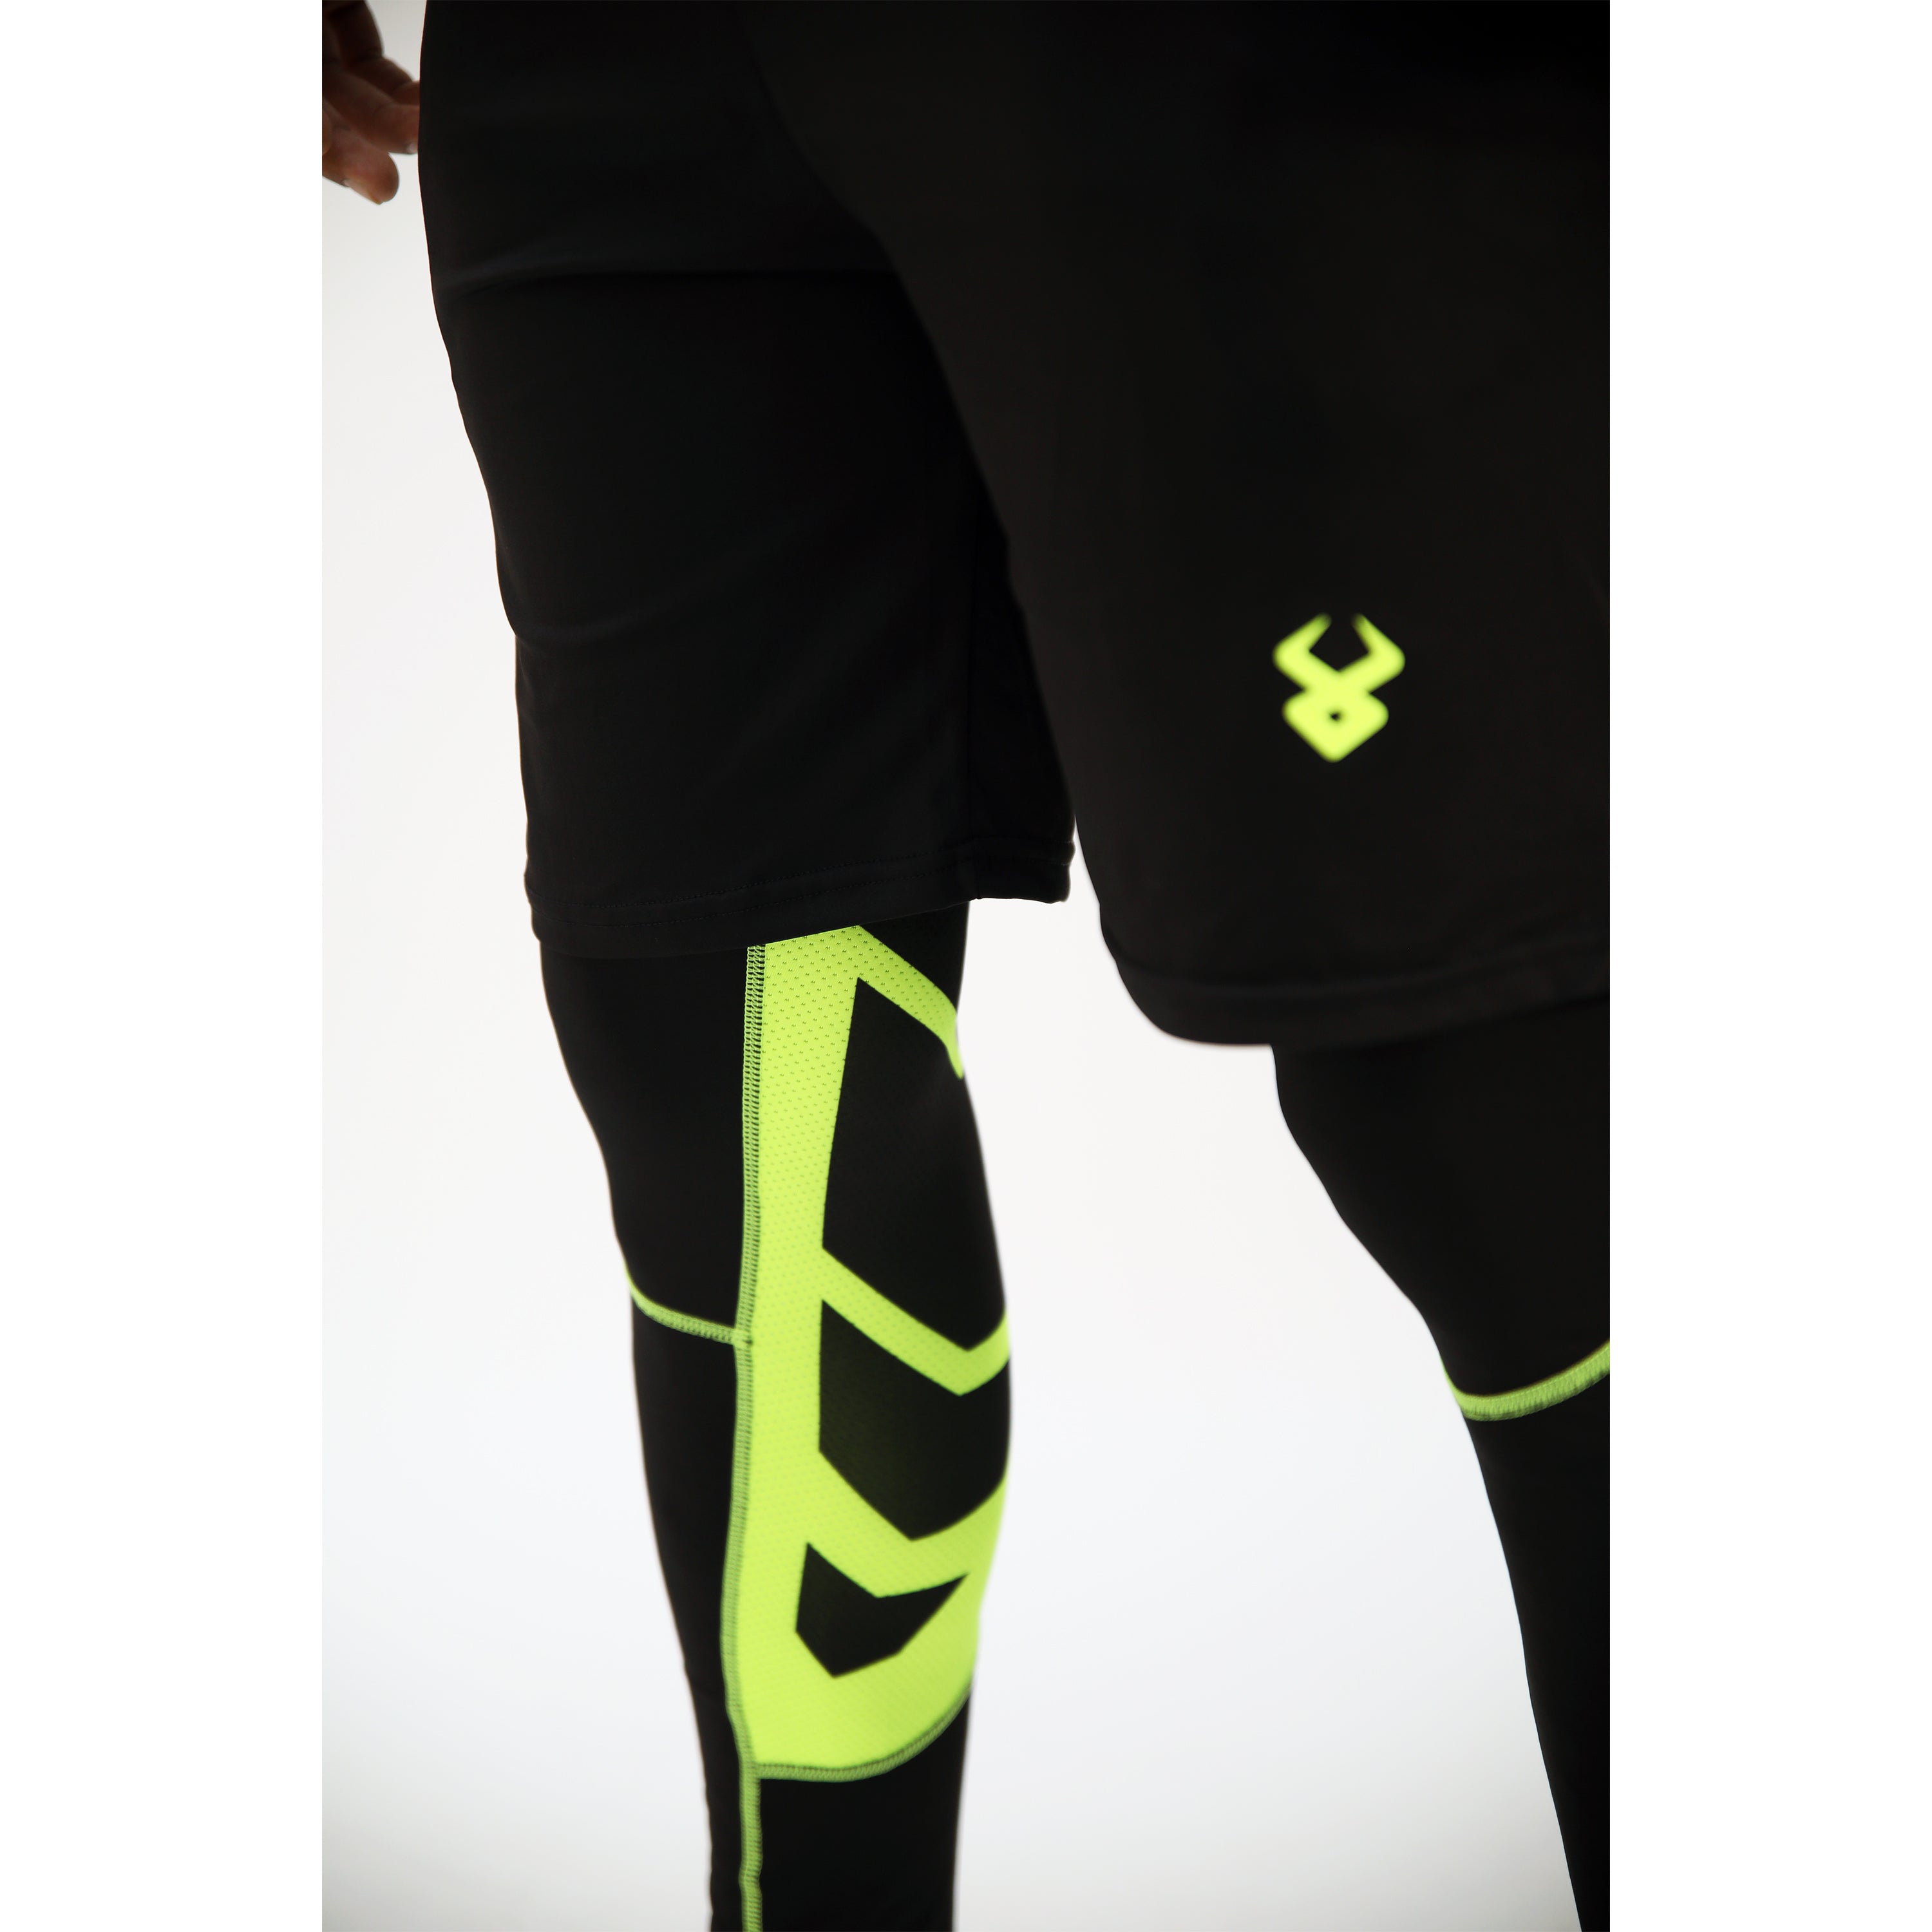 Fireox Mens Compression Shorts & Leggings, Black Green – FIREOX